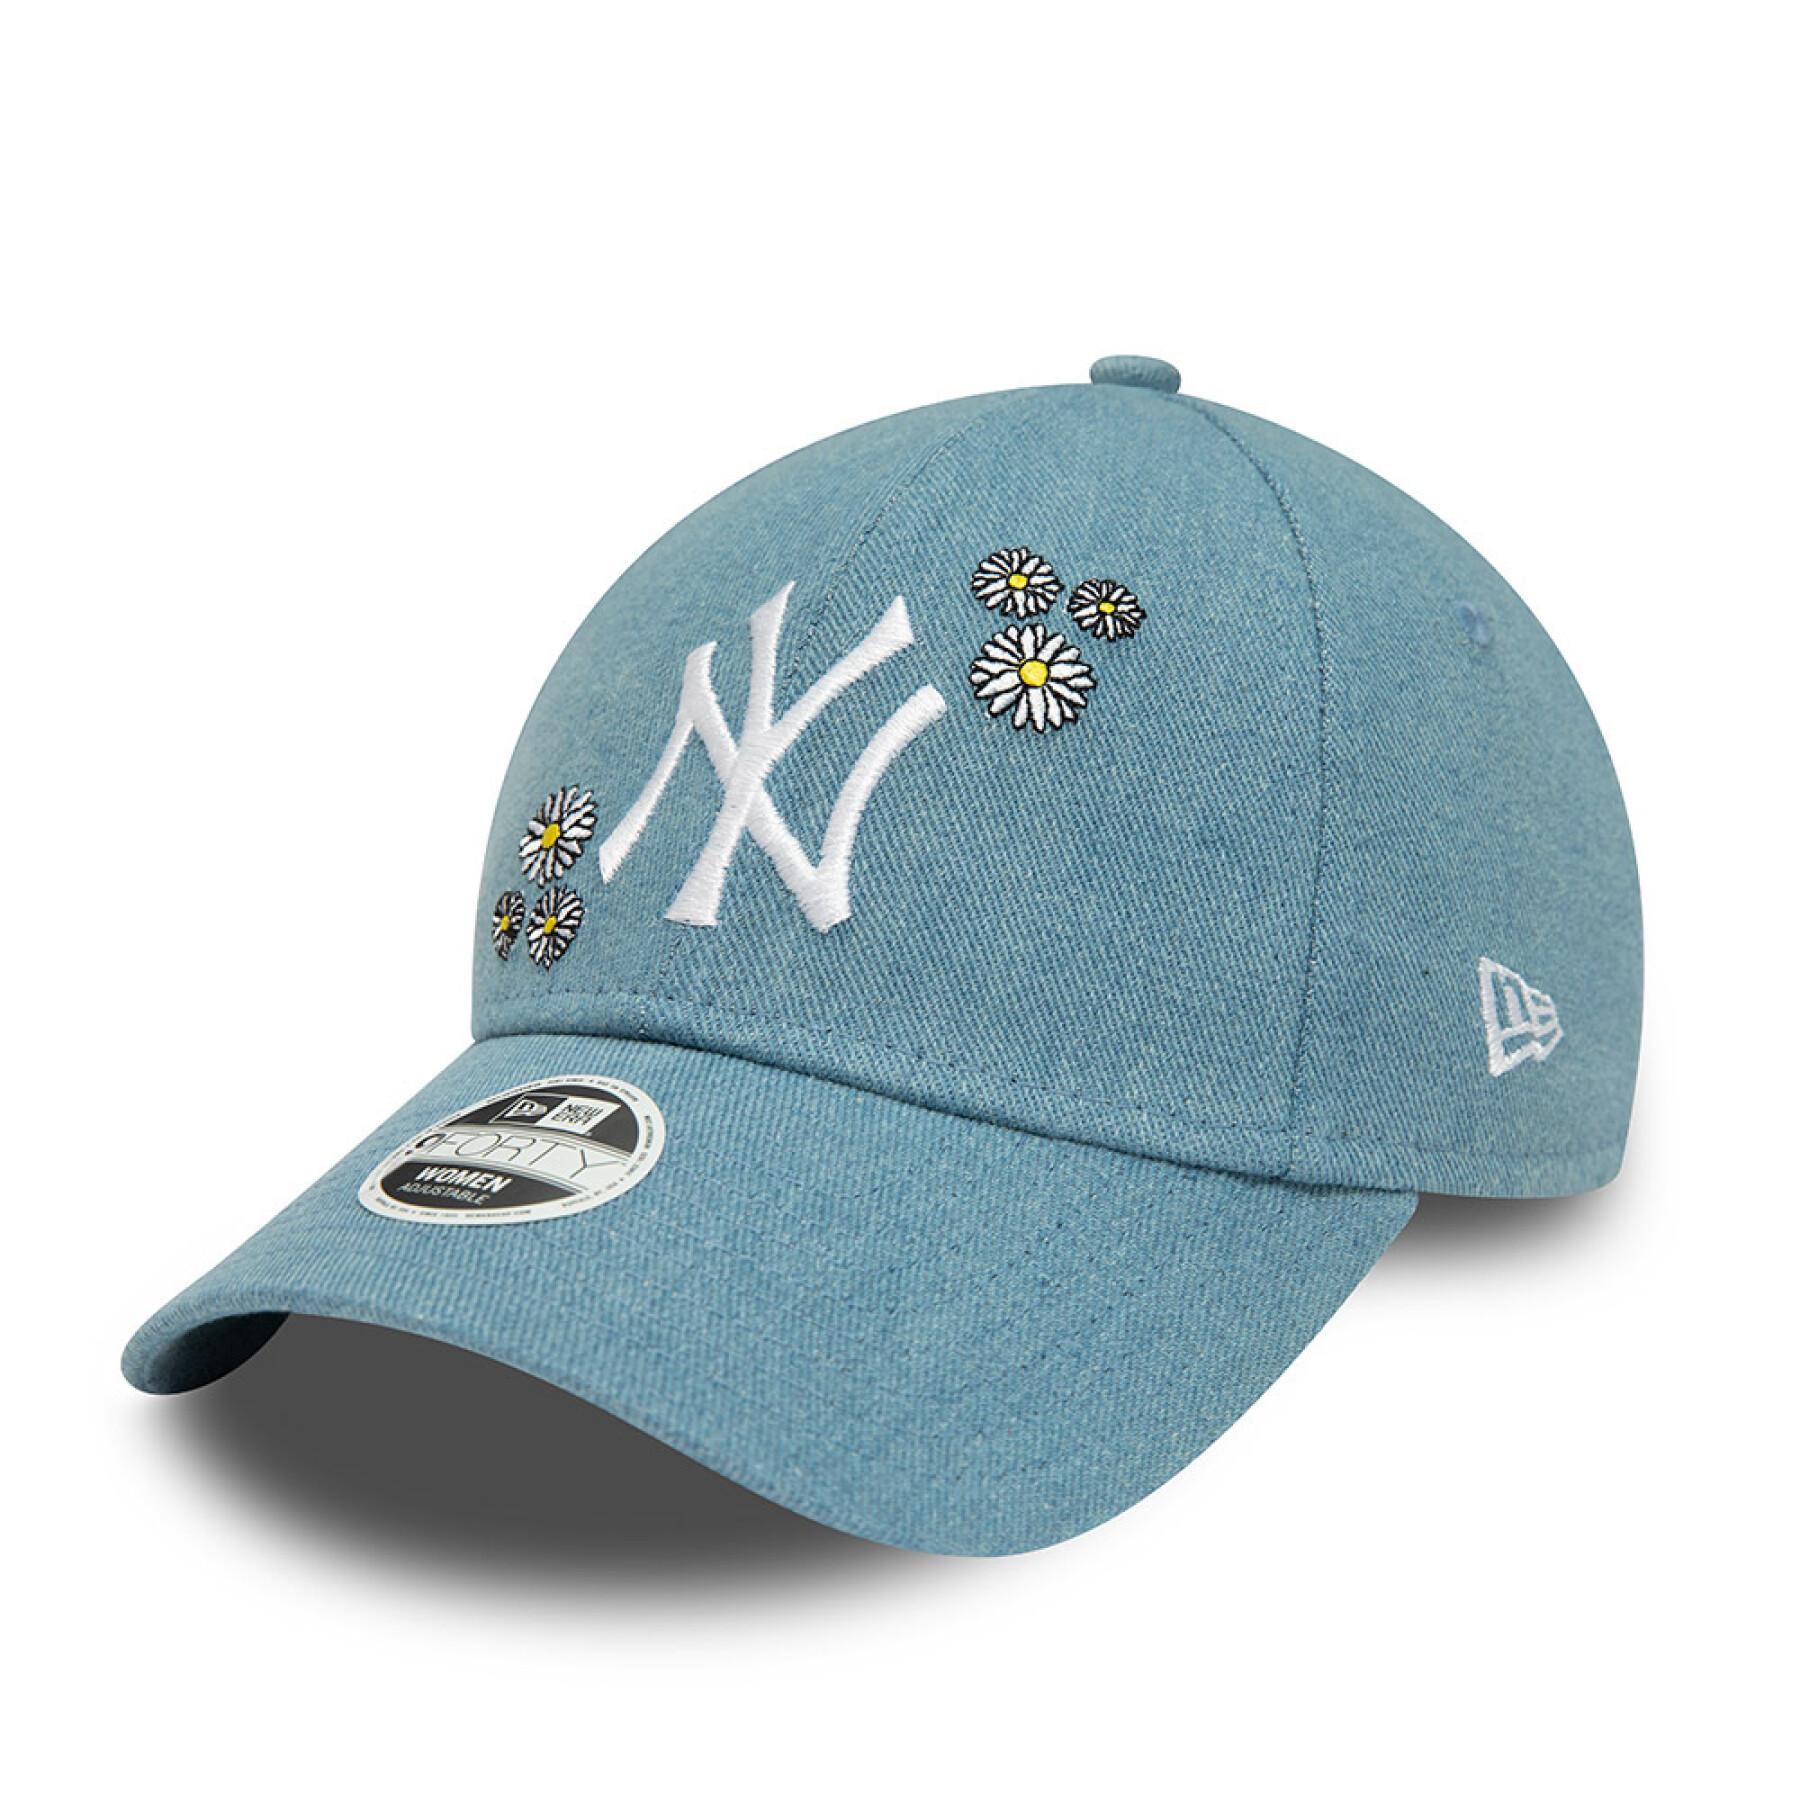 Women's cap New York Yankees